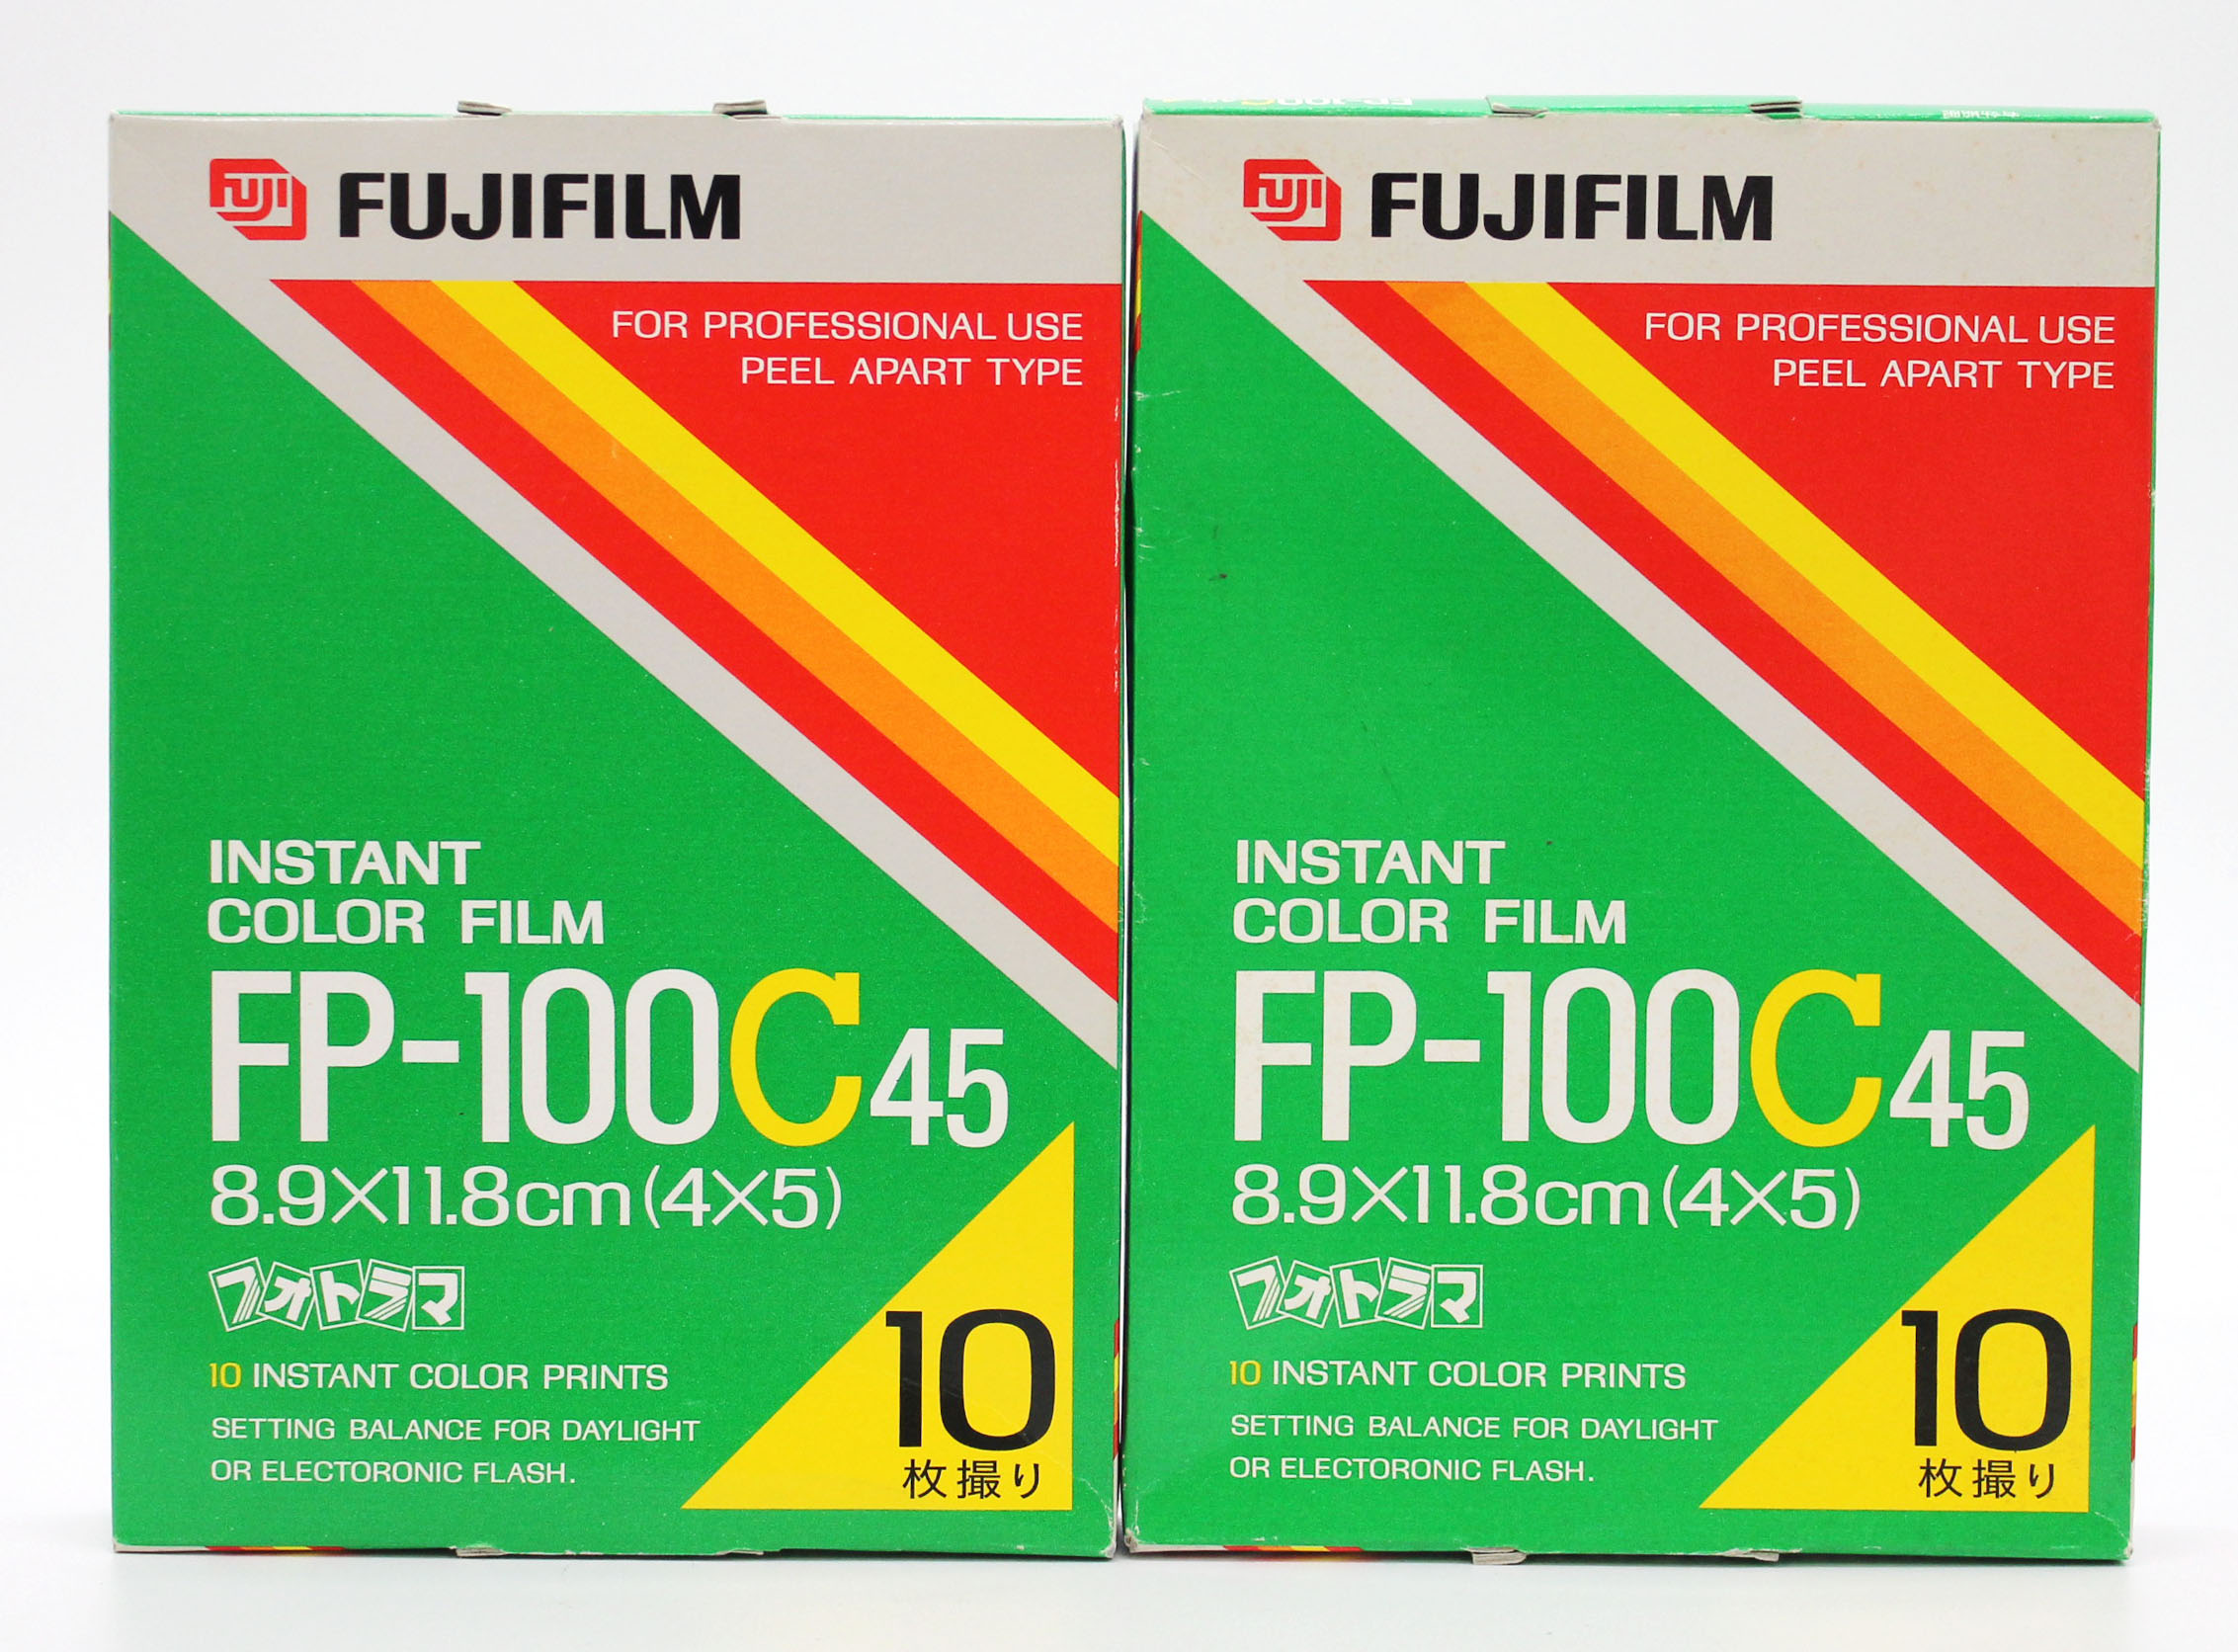 Japan Used Camera Shop | [New] Fuji Fujifilm FP-100C45 4x5 8.9x11.8cm Instant Color Film Set of 2 (EXP 2001)